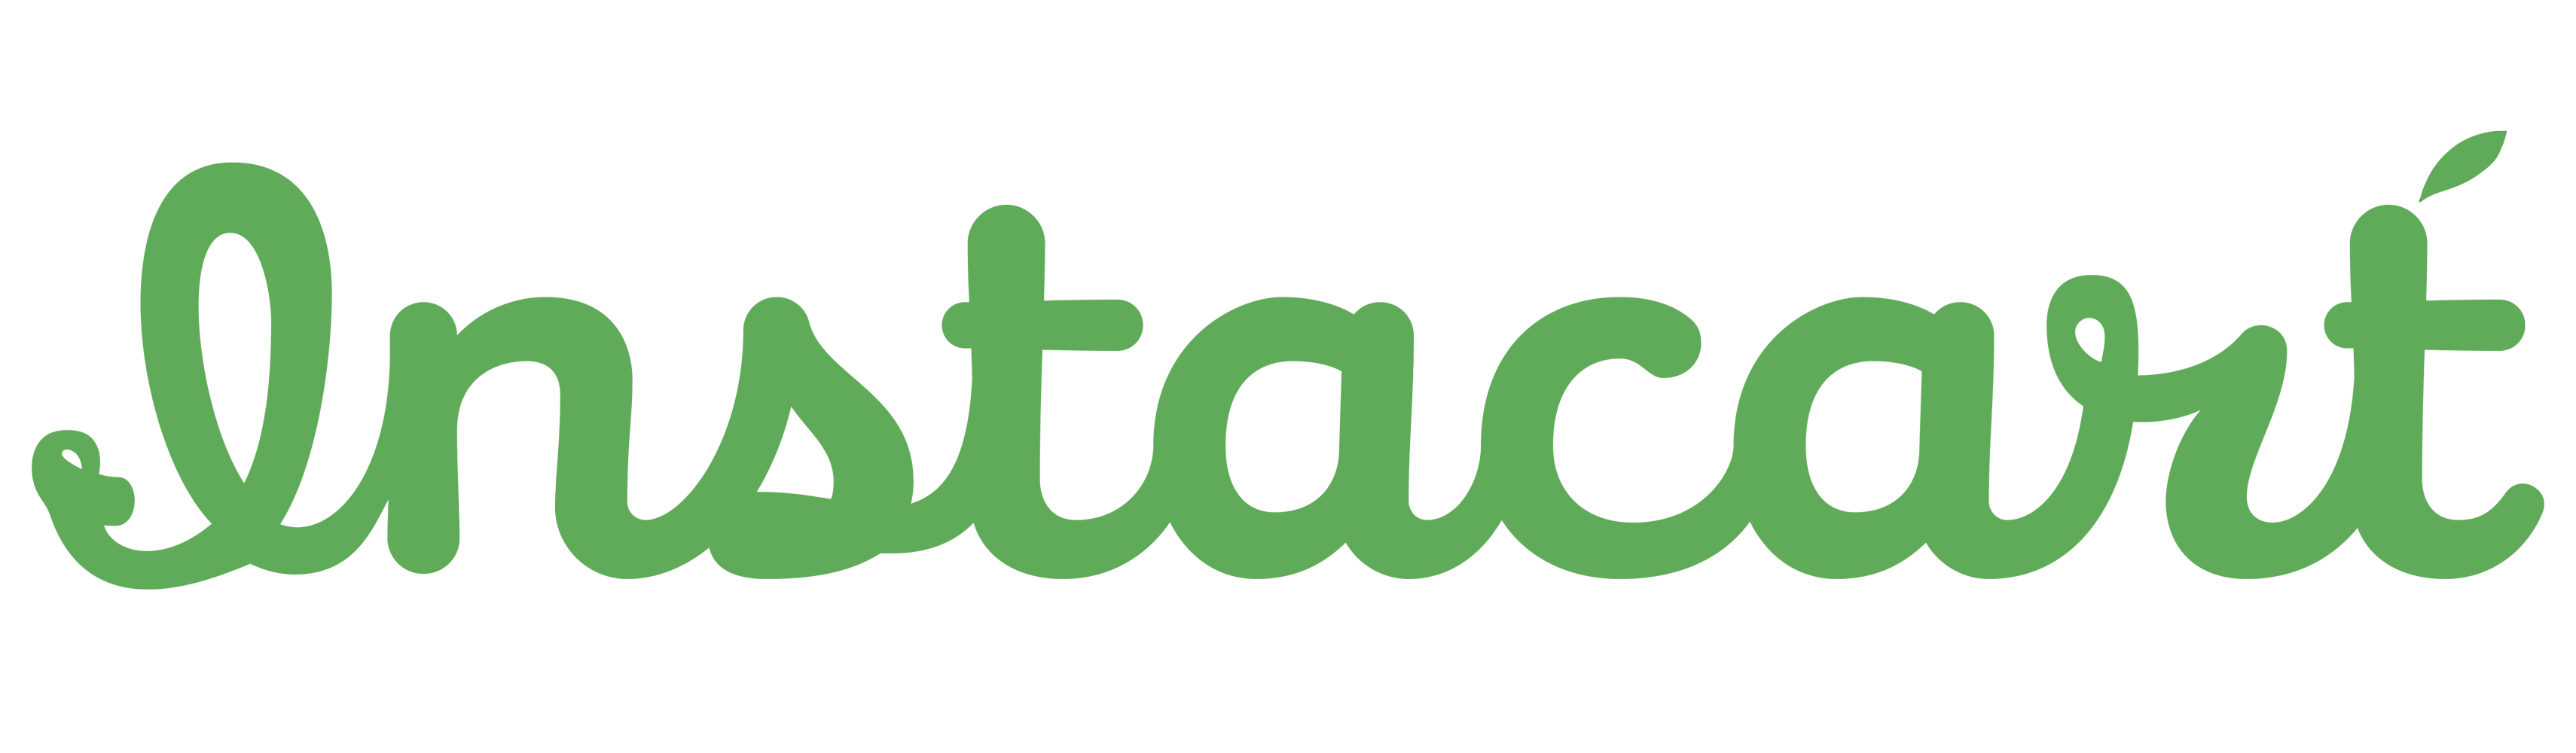 Instacart-logo